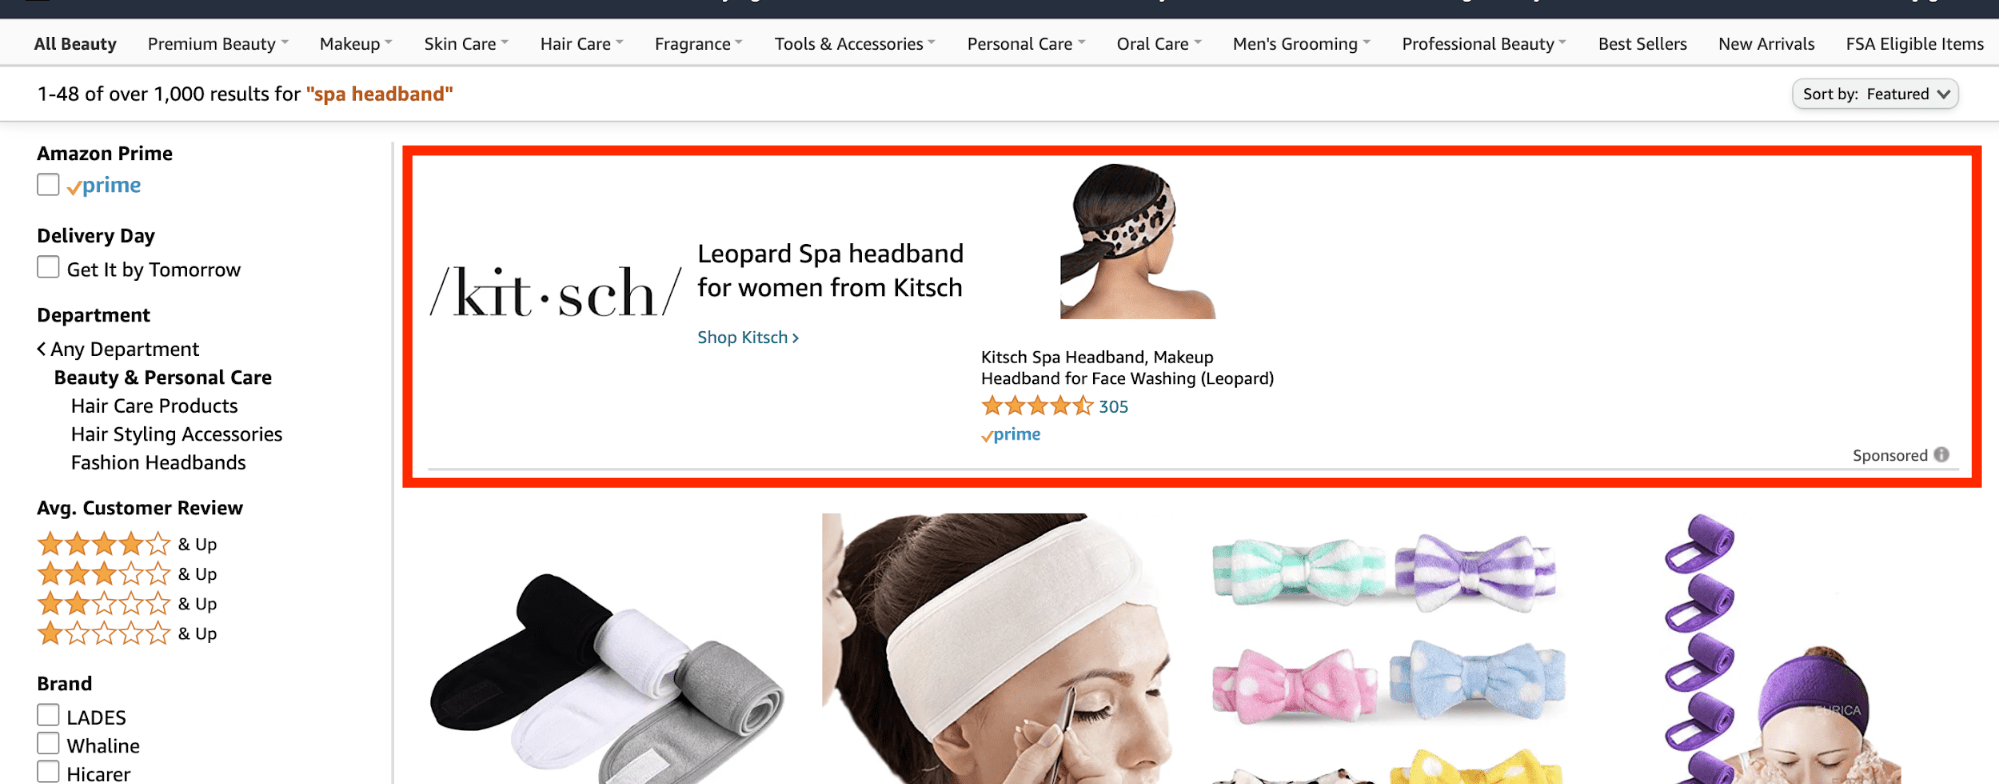 Amazon headline search ad for spa headband